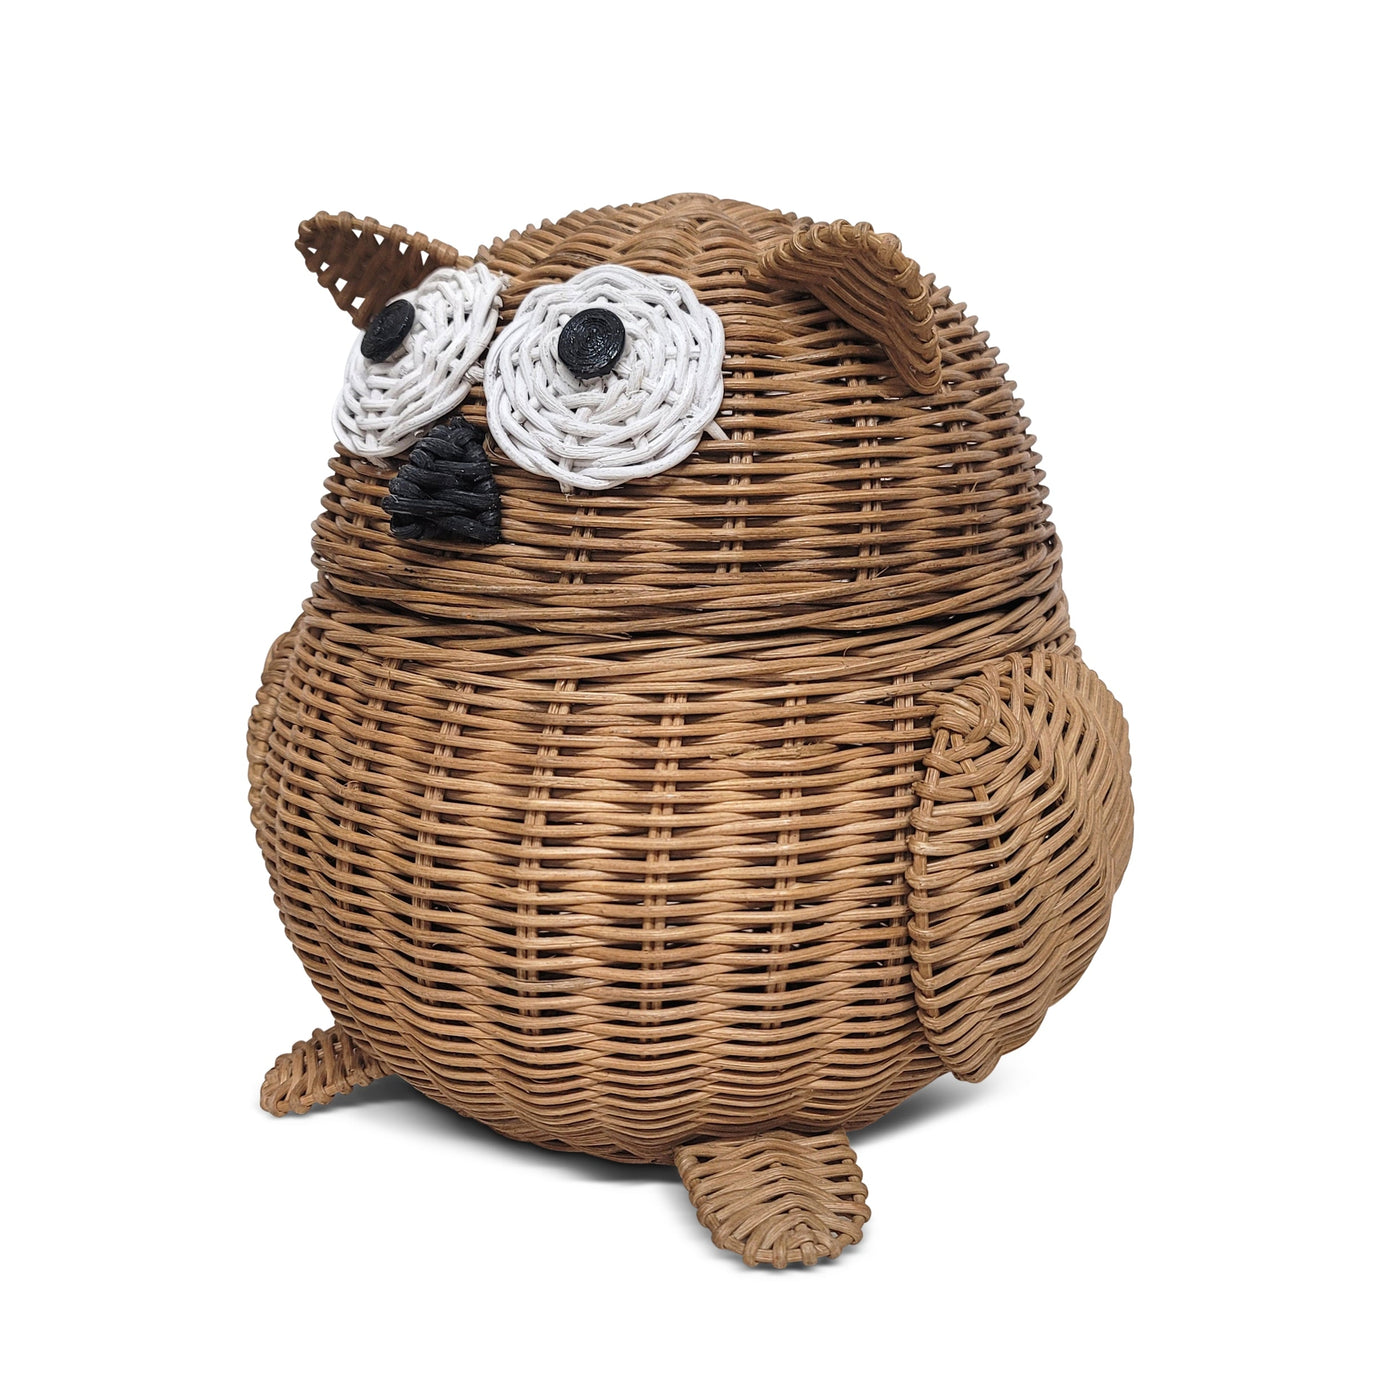 Brown Owl Rattan Storage Basket with Lid Decorative Home Decor Hand Woven Shelf Organizer Cute Handmade Handcrafted Gift Art Decoration Artwork Wicker